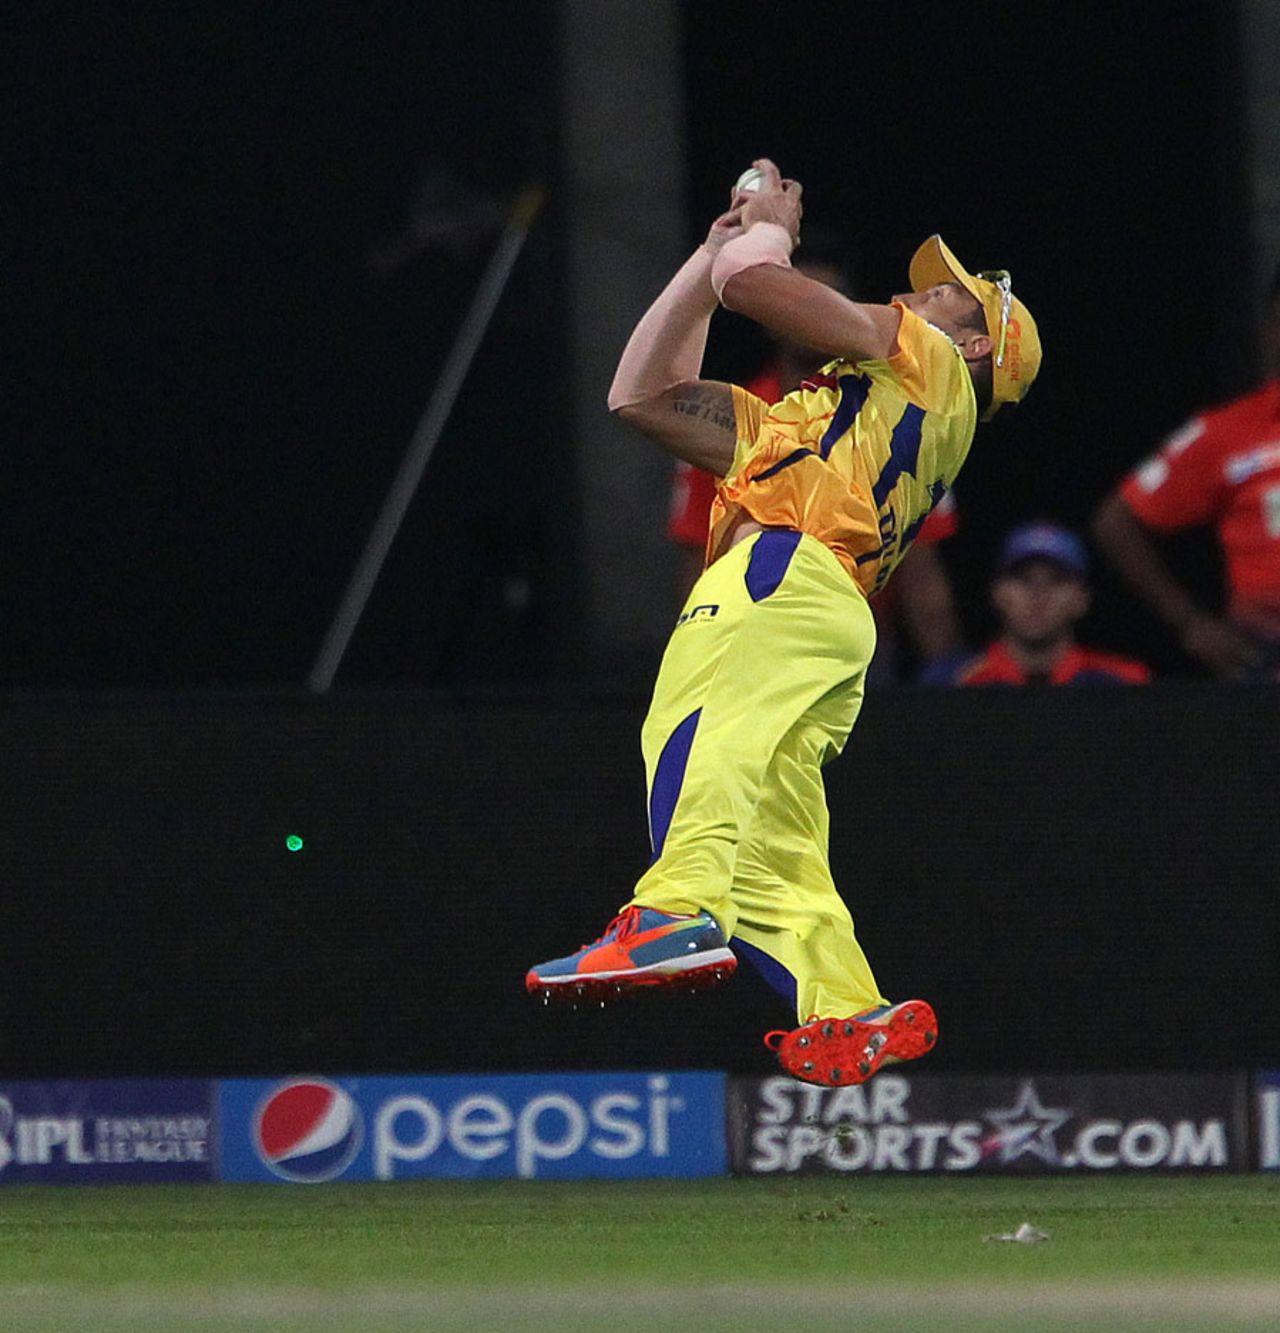 Faf du Plessis was immaculate in the field, Chennai Super Kings v Delhi Daredevils, IPL 2014, Abu Dhabi, April 21, 2014